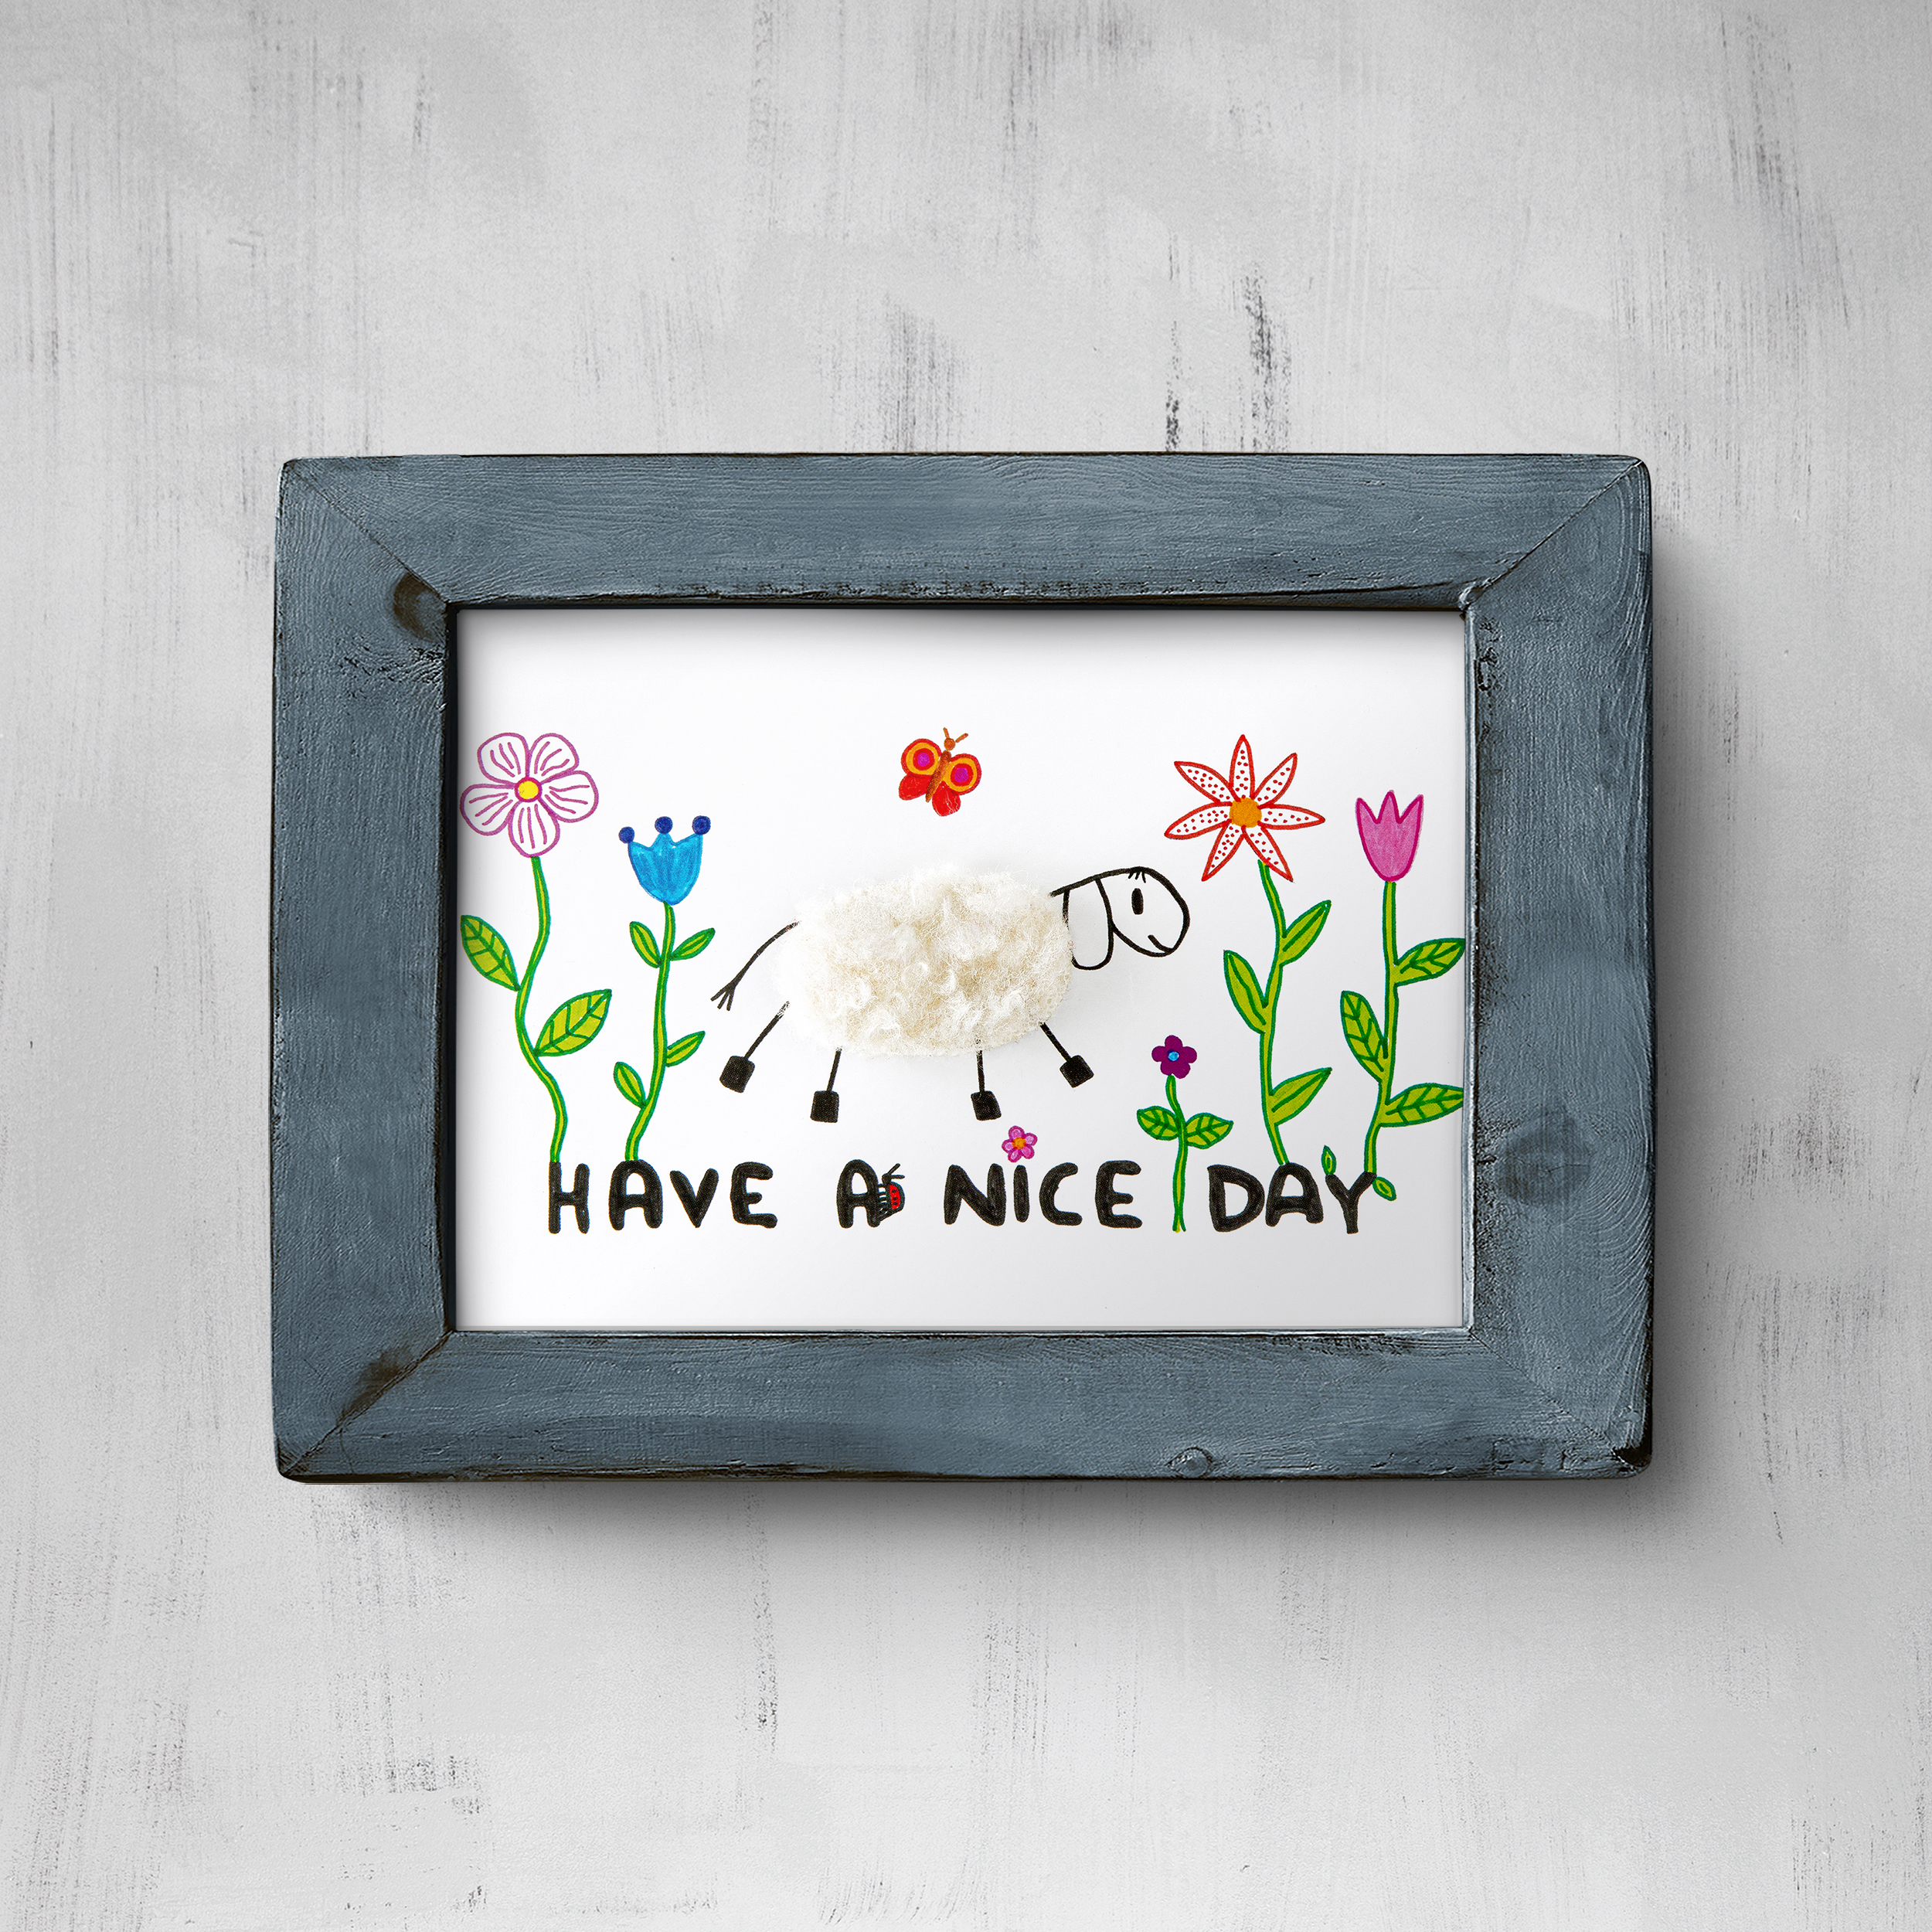 Plüschkarte "Have a nice day"